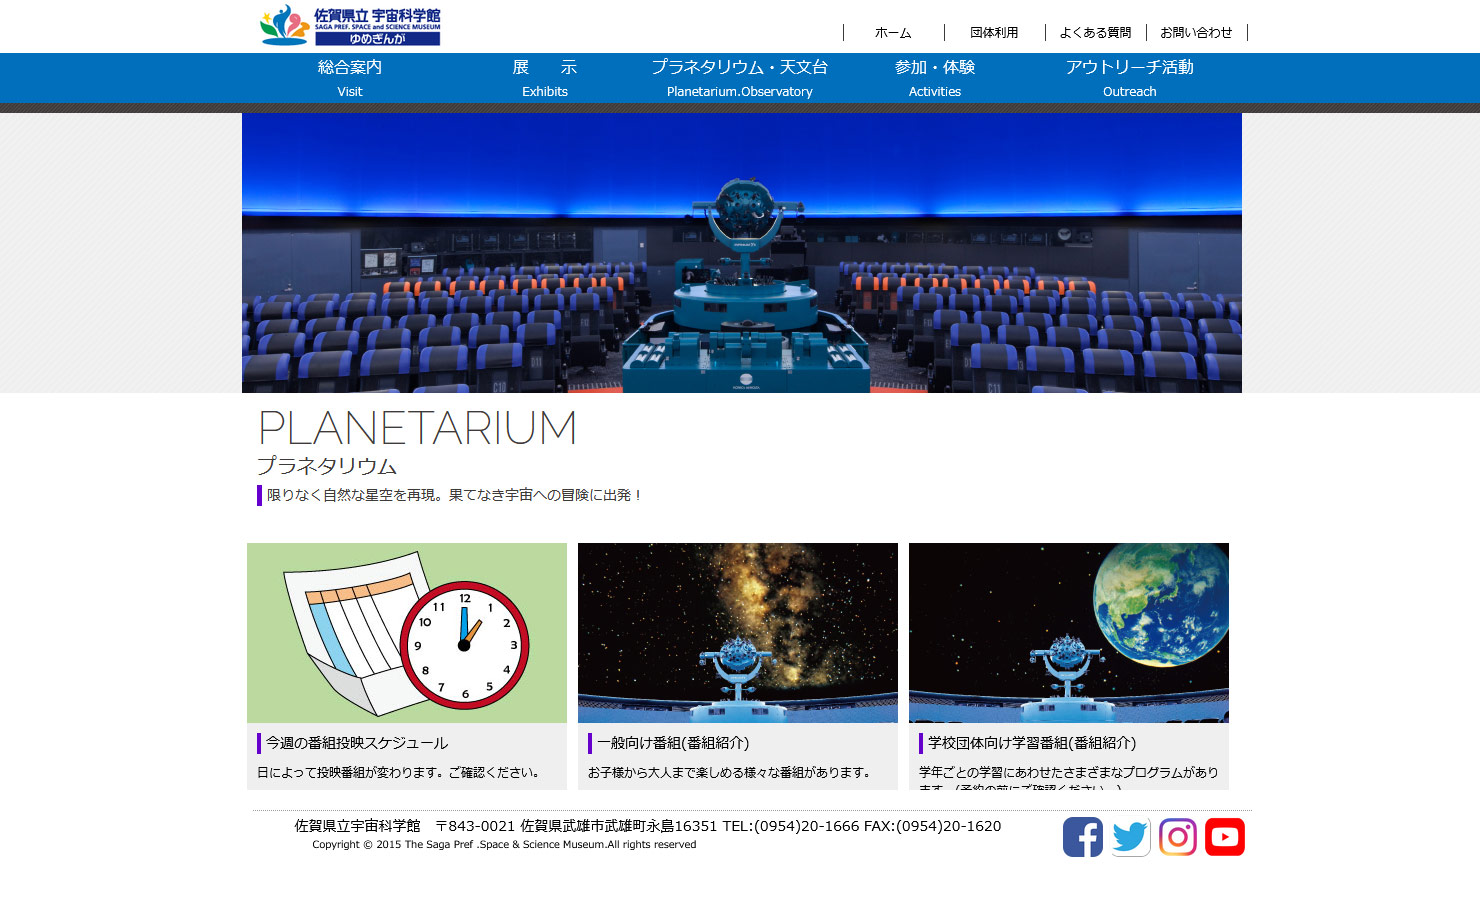 佐賀県立宇宙科学館サイト画像